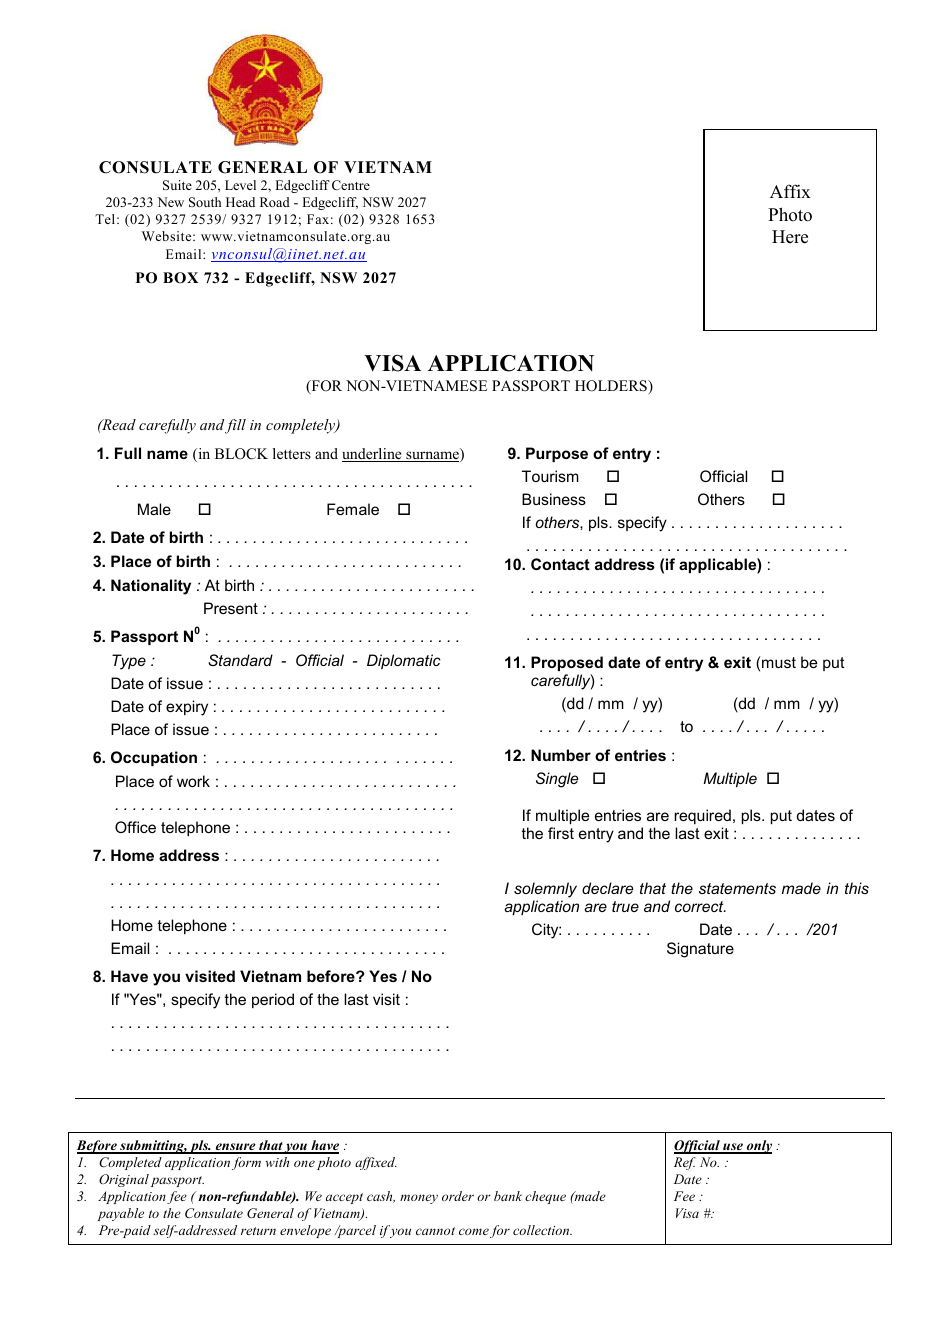 Vietnam Visa Application Form - Consulate General of Vietnam - Edgecliff, New South Wales, Australia, Page 1